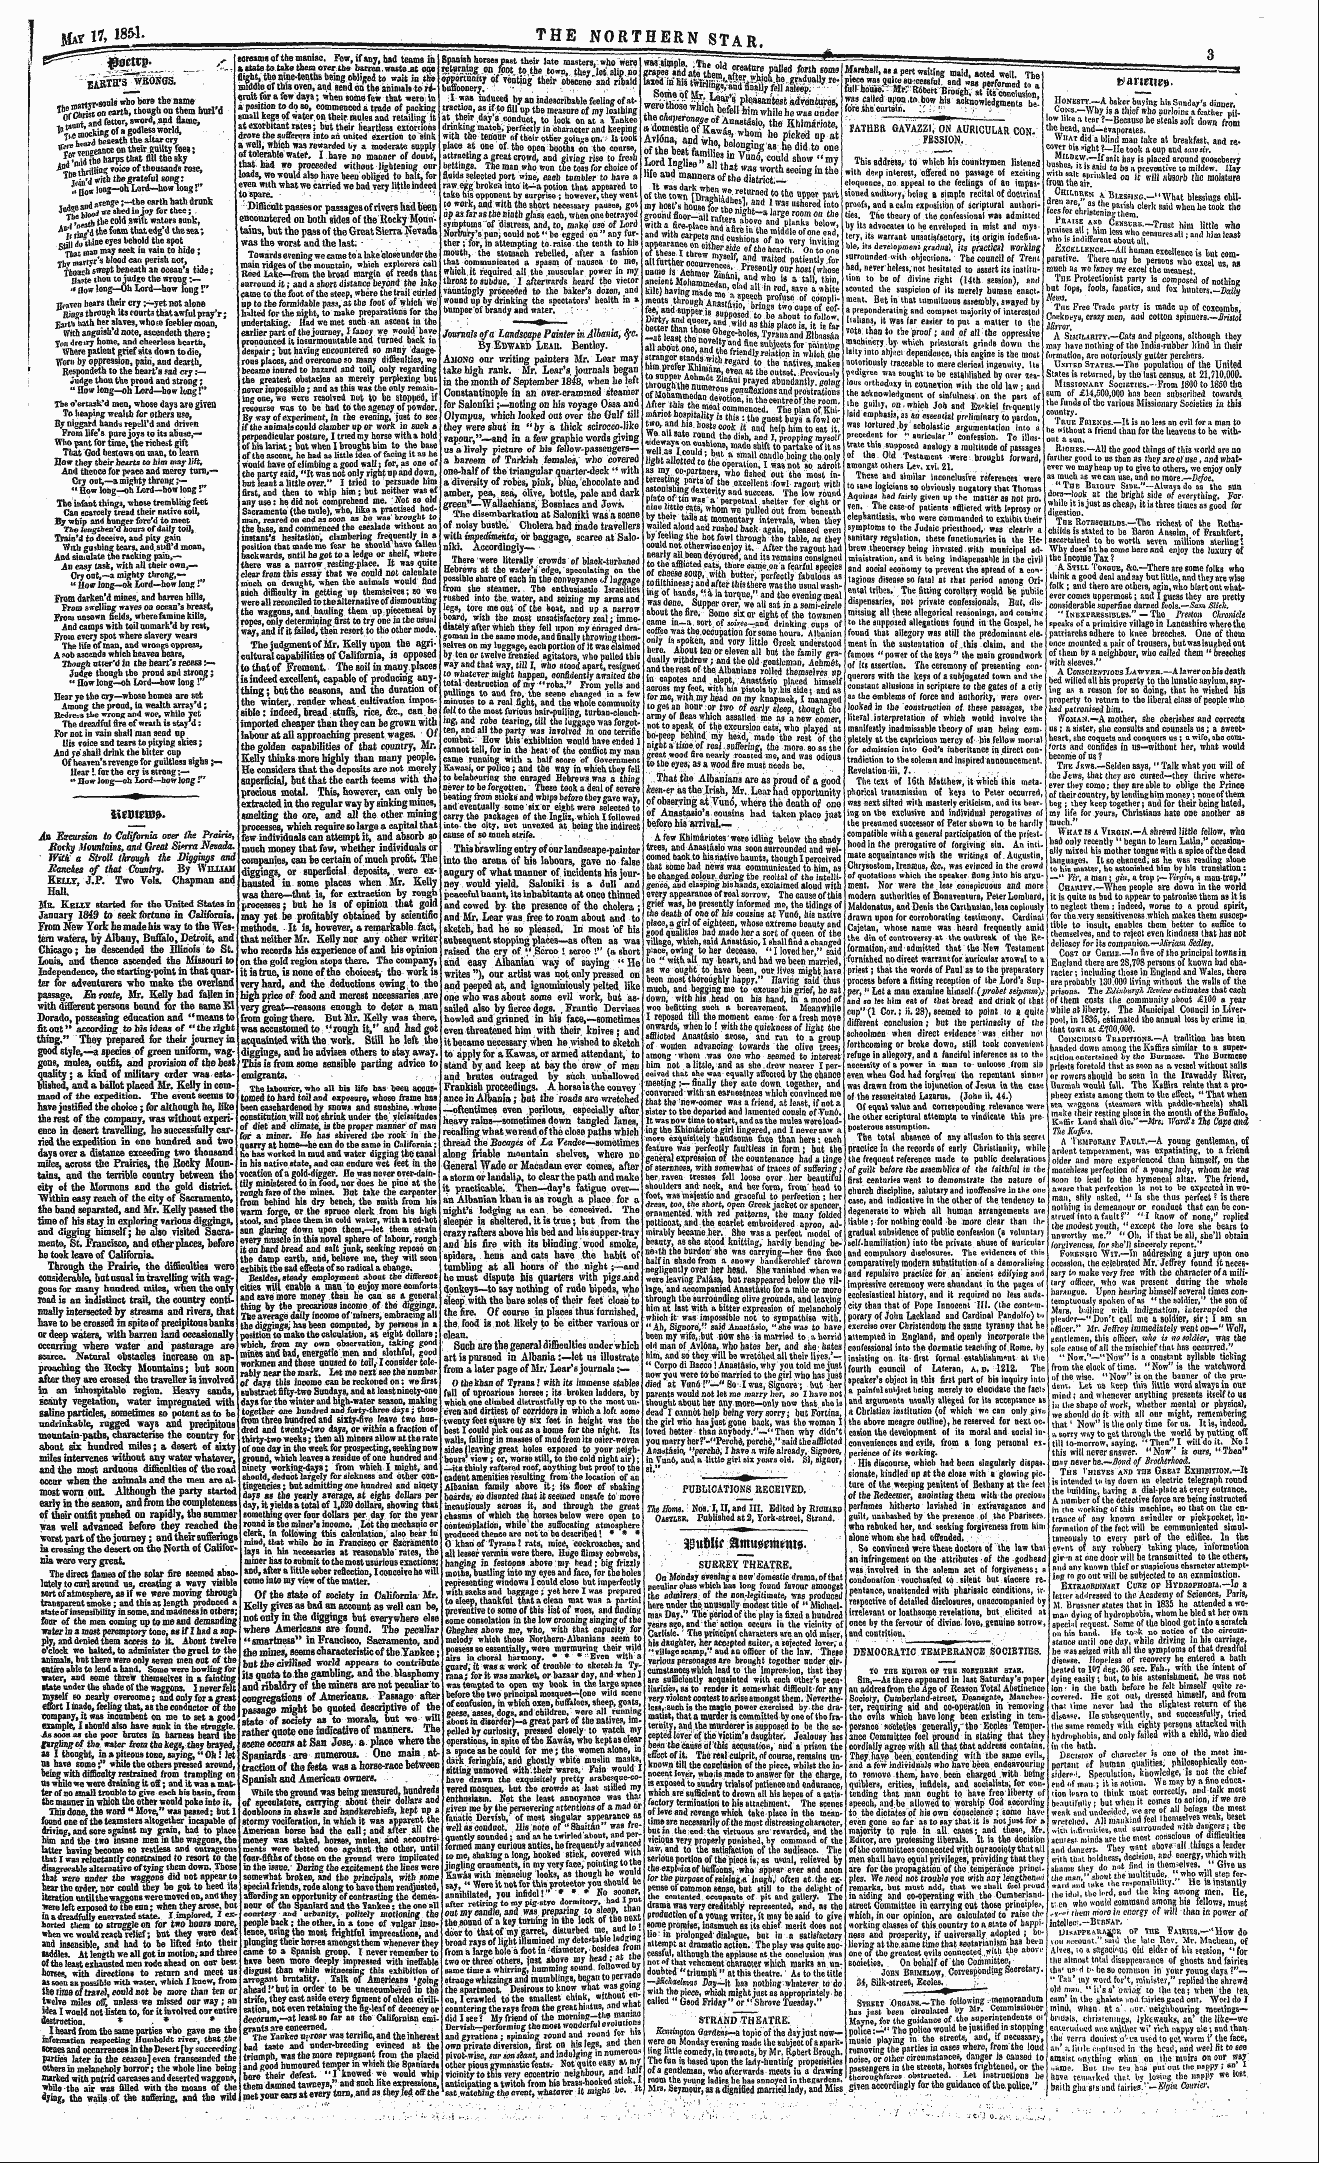 Northern Star (1837-1852): jS F Y, 2nd edition - Spttfiwr Mmtmmt